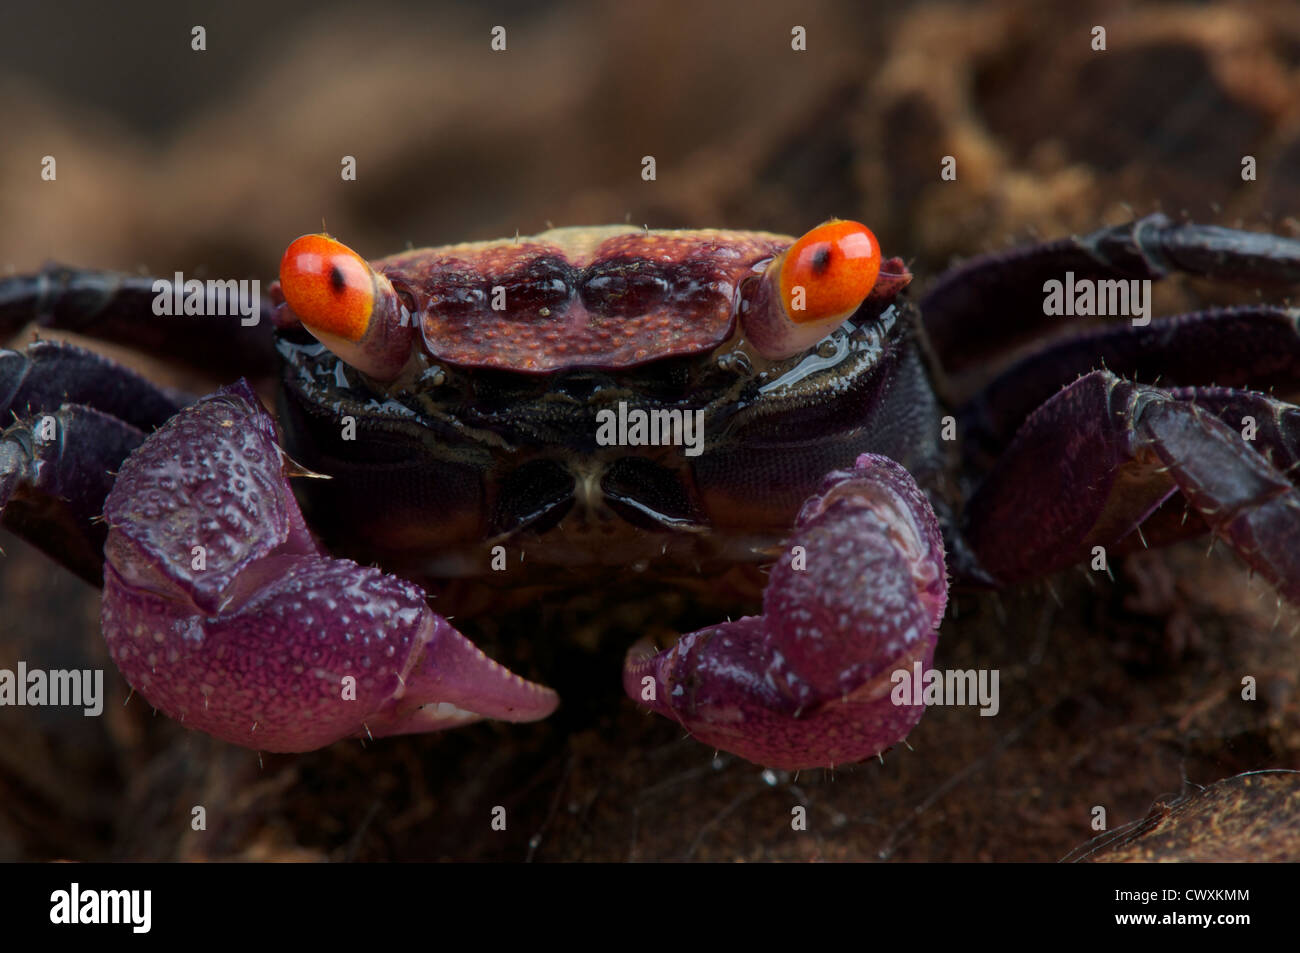 Purple vampire crab / Geosesarma sp. Stock Photo